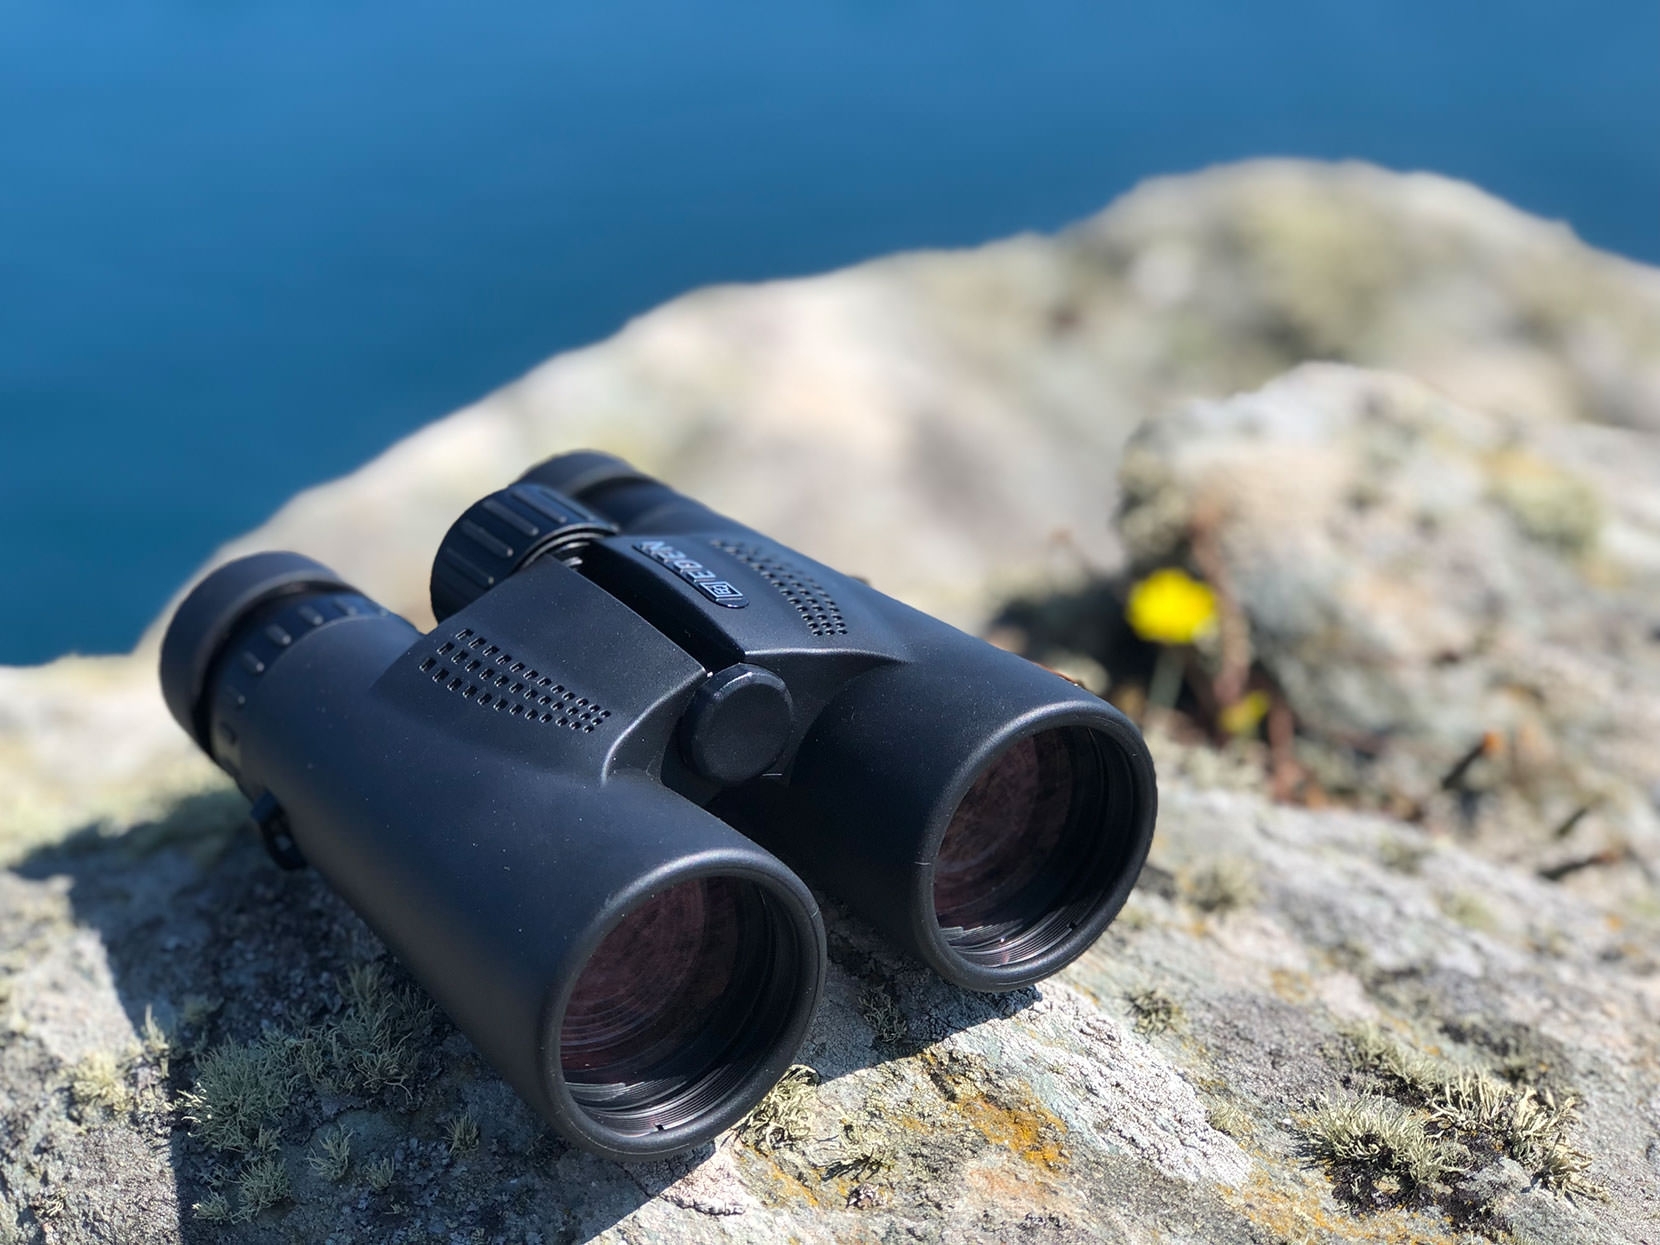 Eden 10x42 Binoculars Review - David Clapp Photography Limited